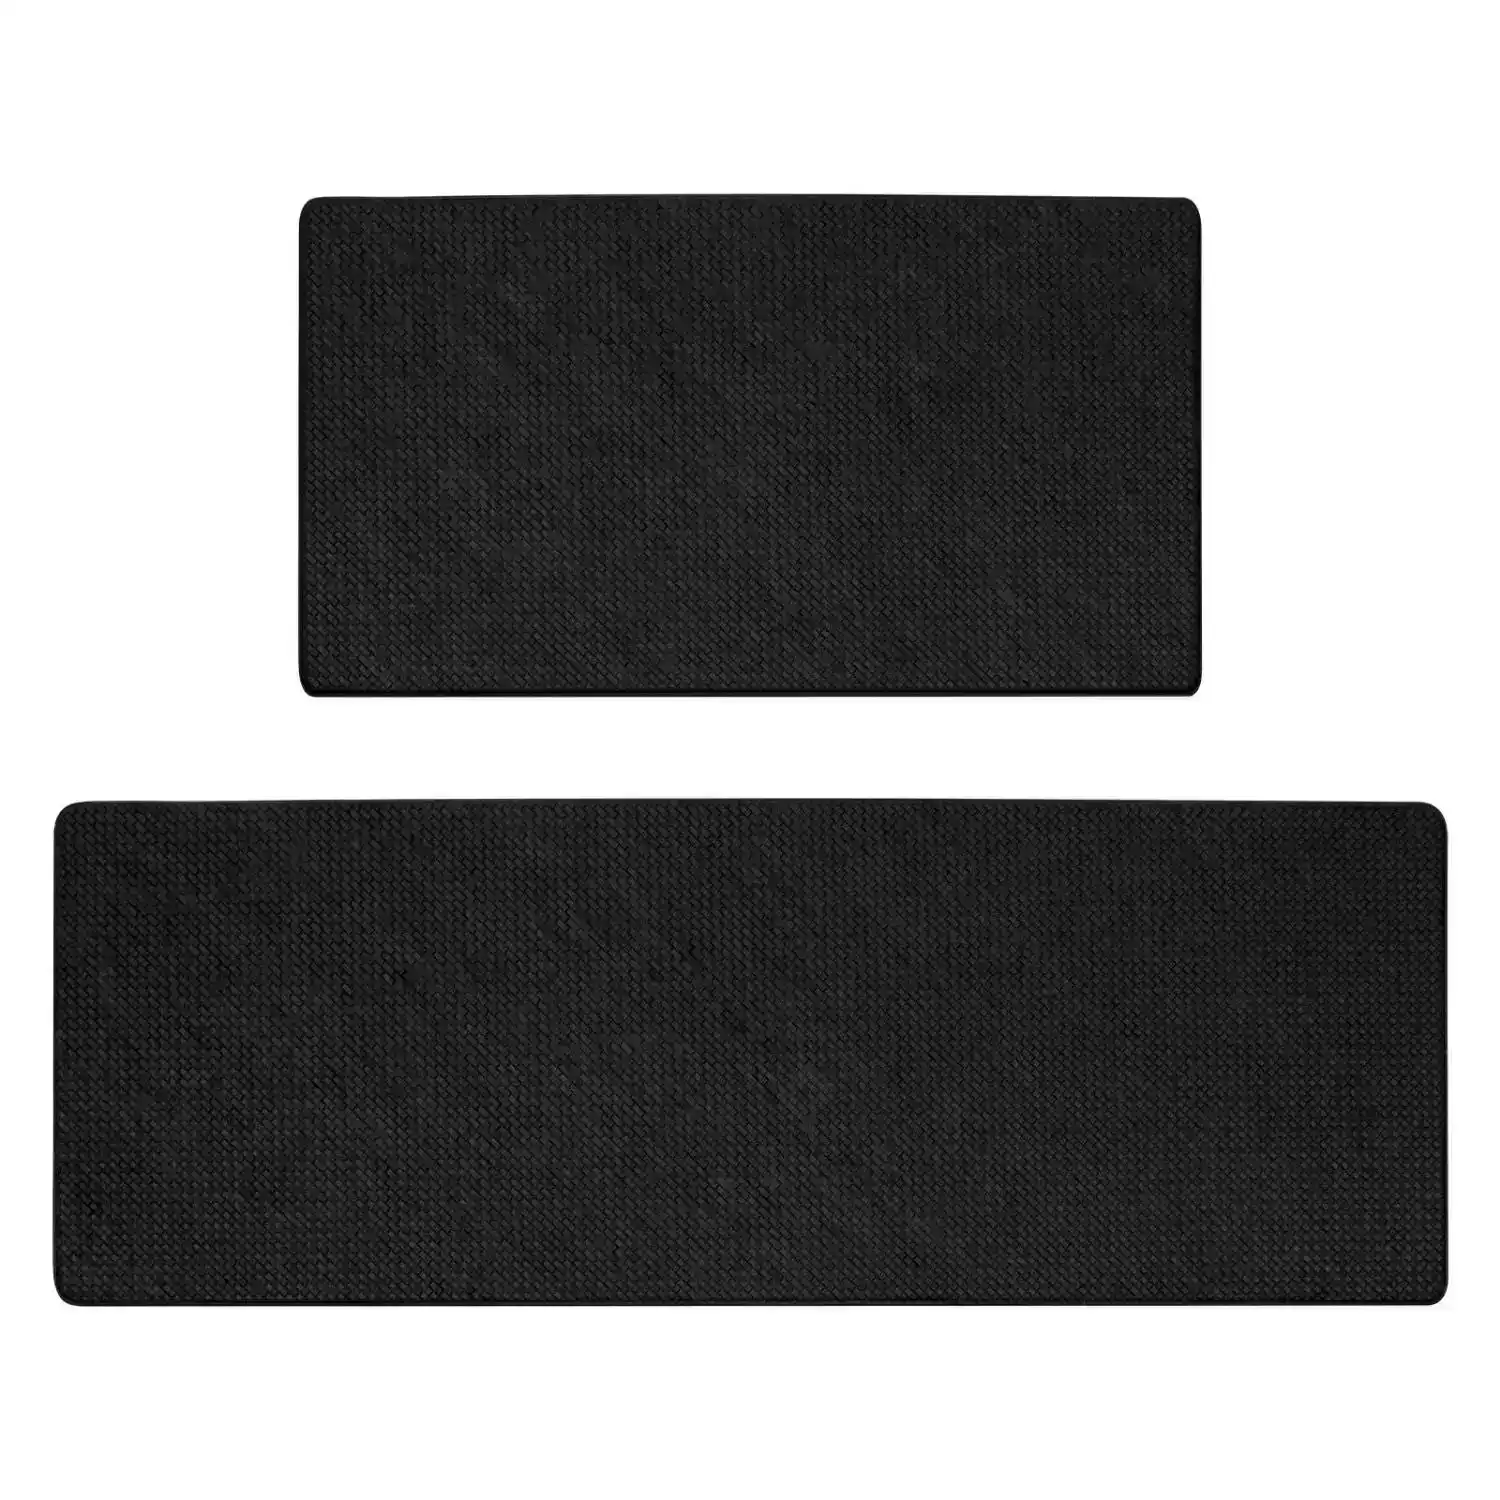 Gominimo PVC Non-Slip Waterproof Kitchen Floor Rug Mat 2pcs Set Black